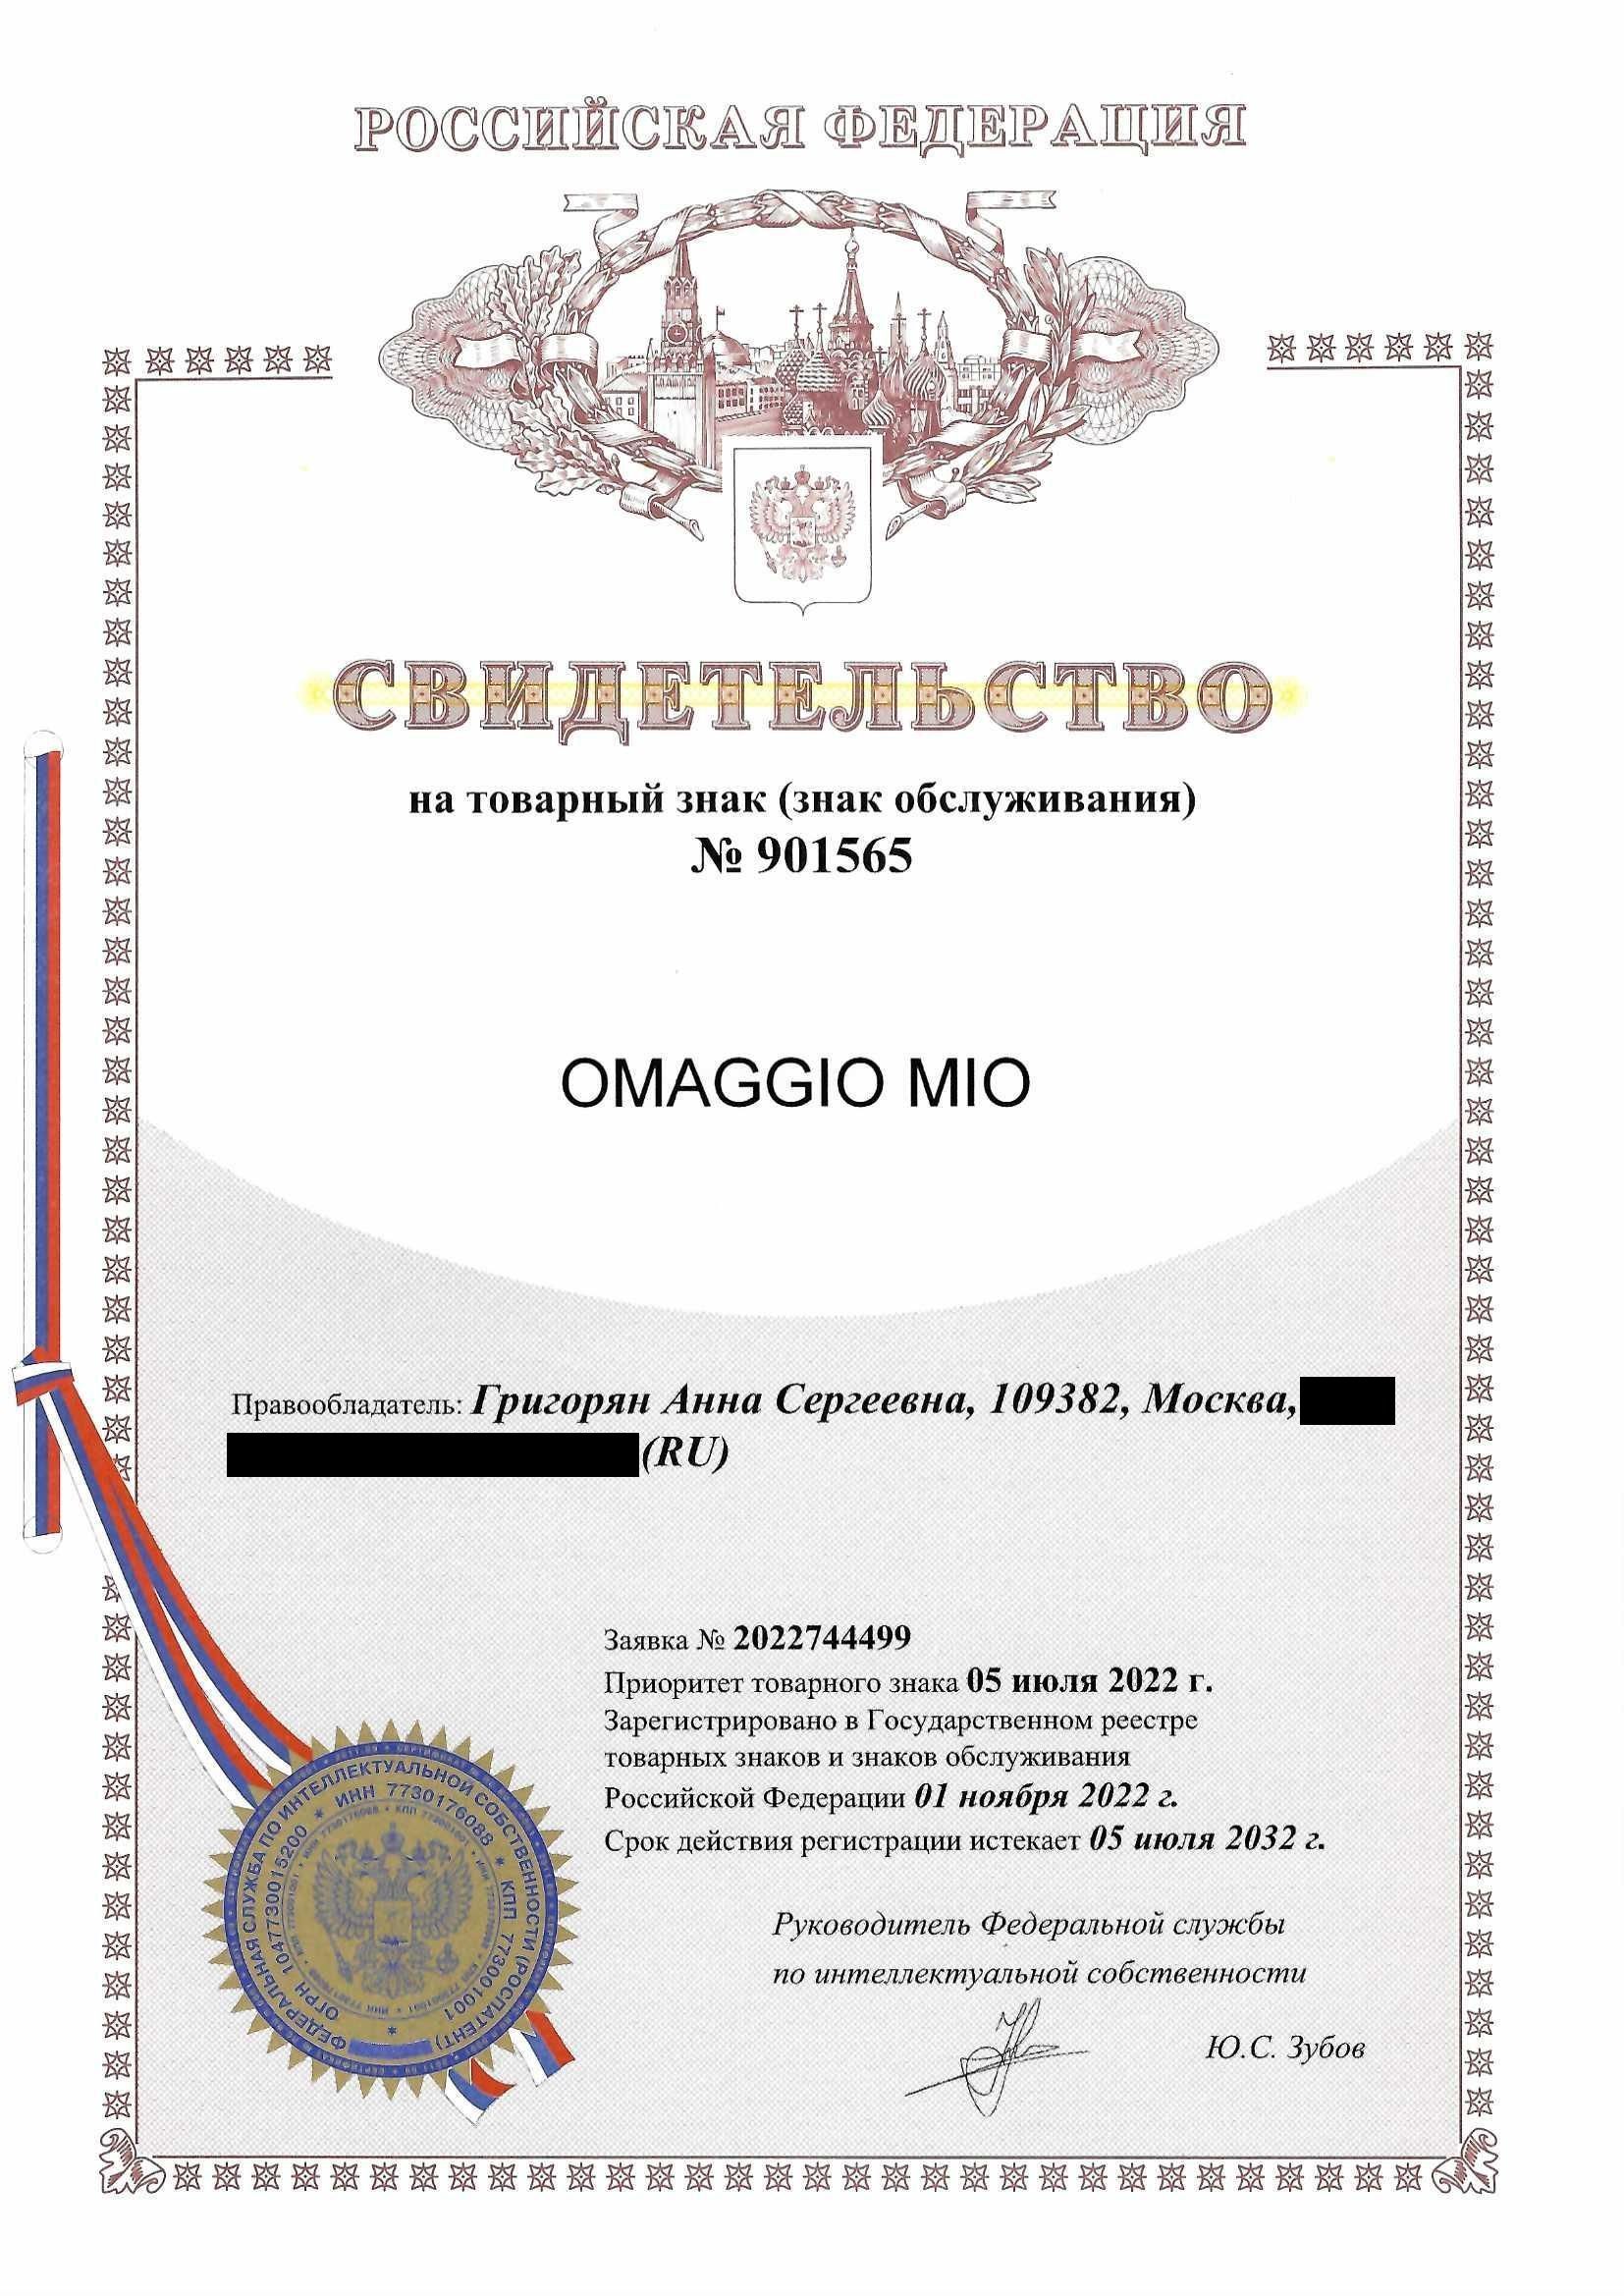 Товарный знак № 901565 – Omaggio mio